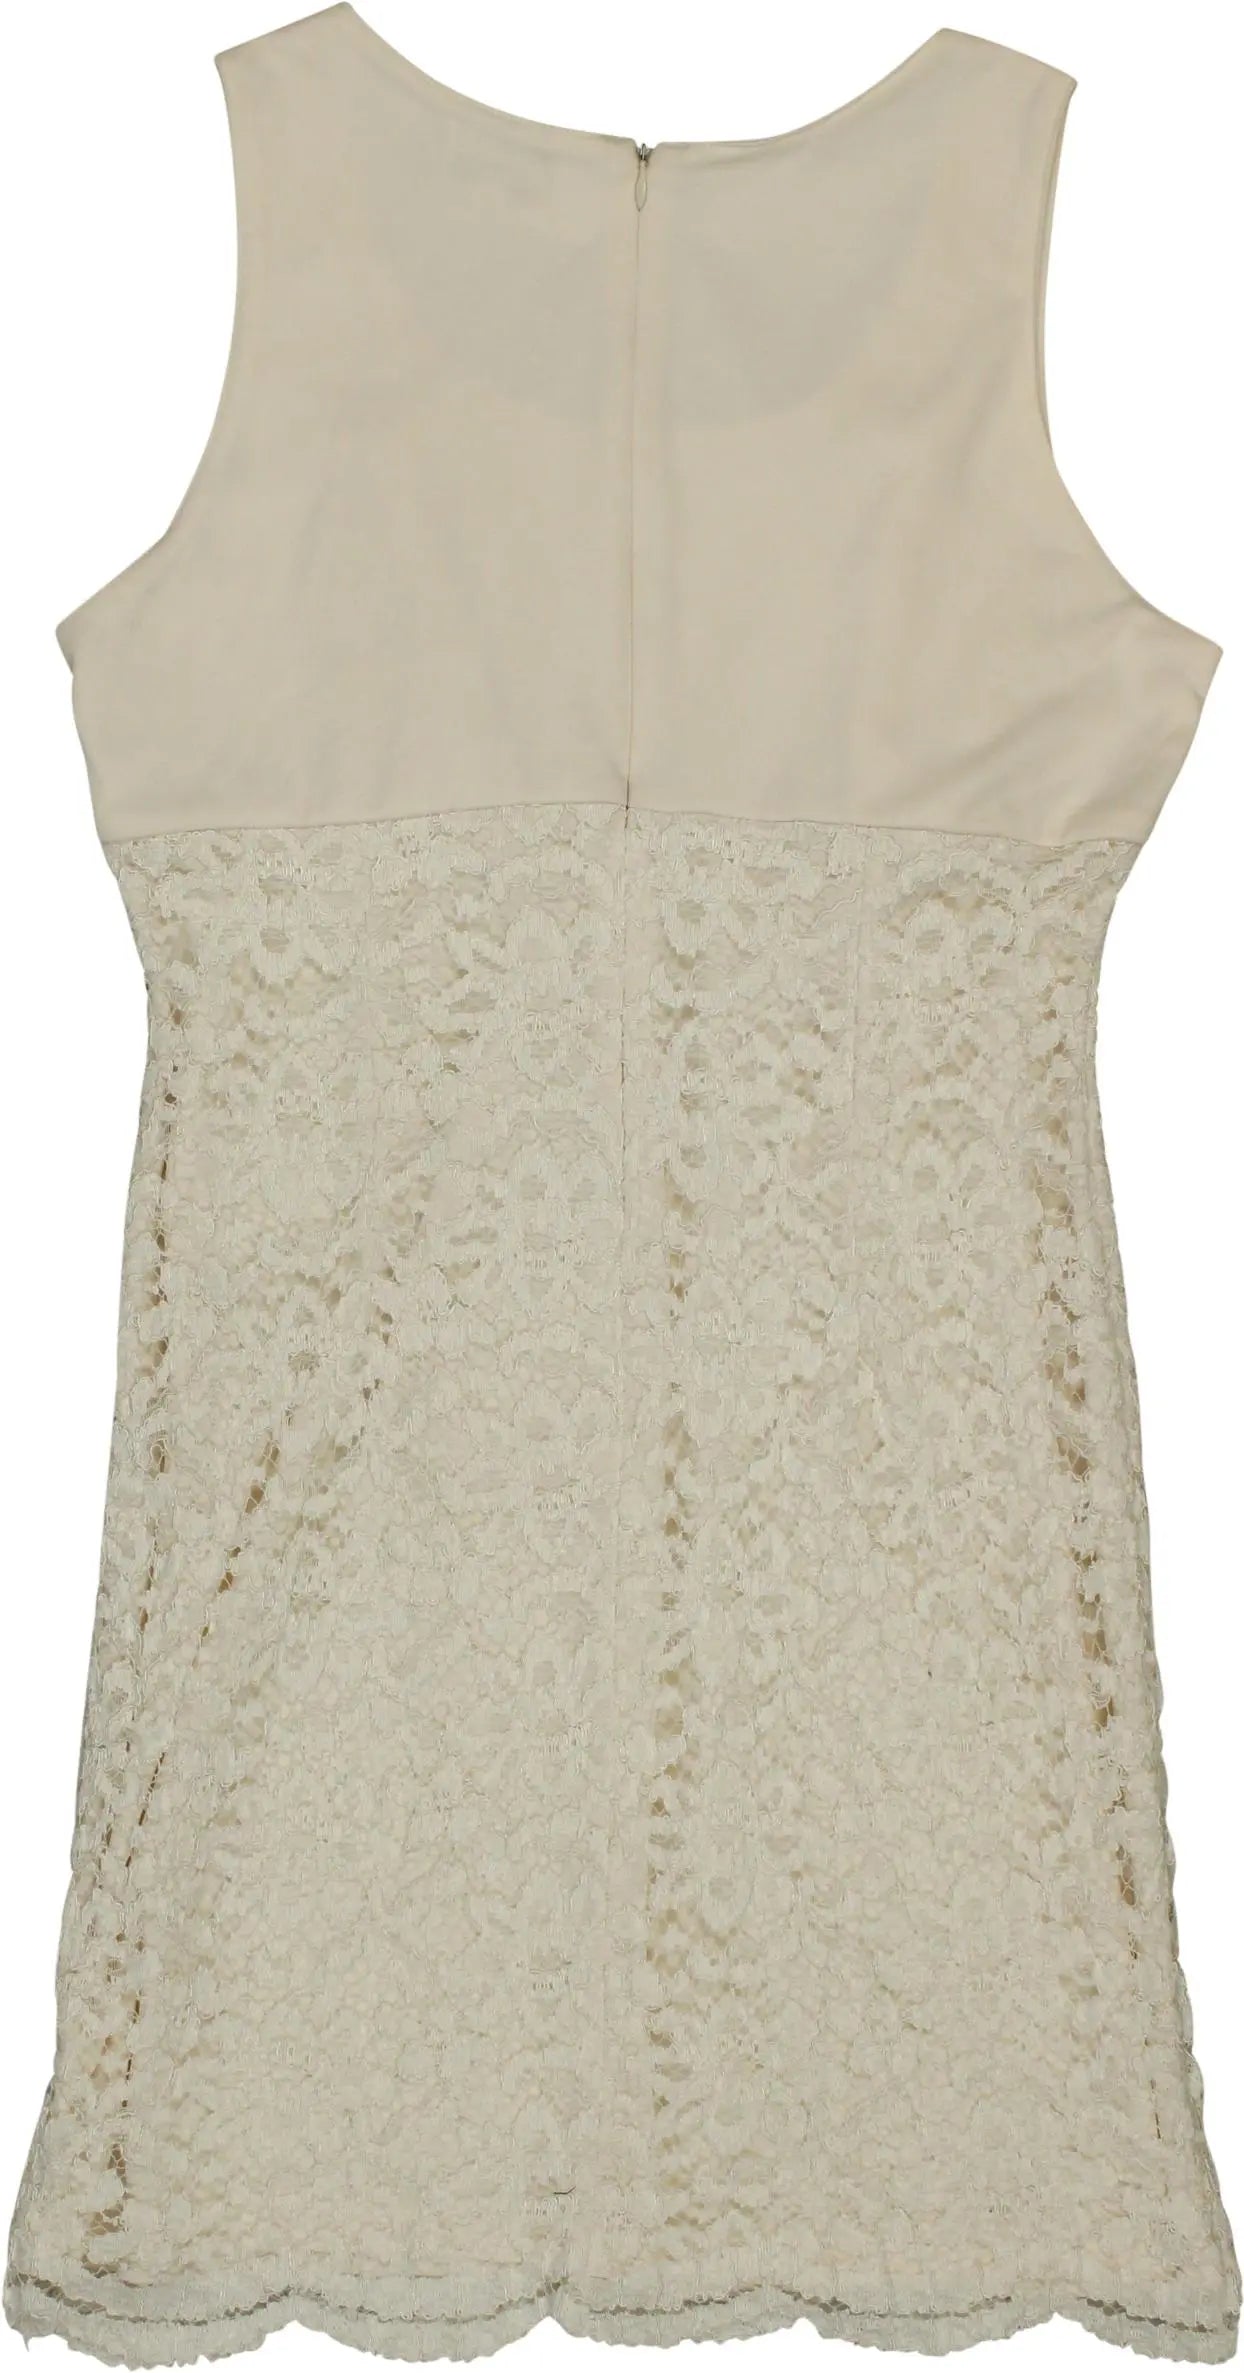 On n'est pas des anges! - Lace Dress- ThriftTale.com - Vintage and second handclothing